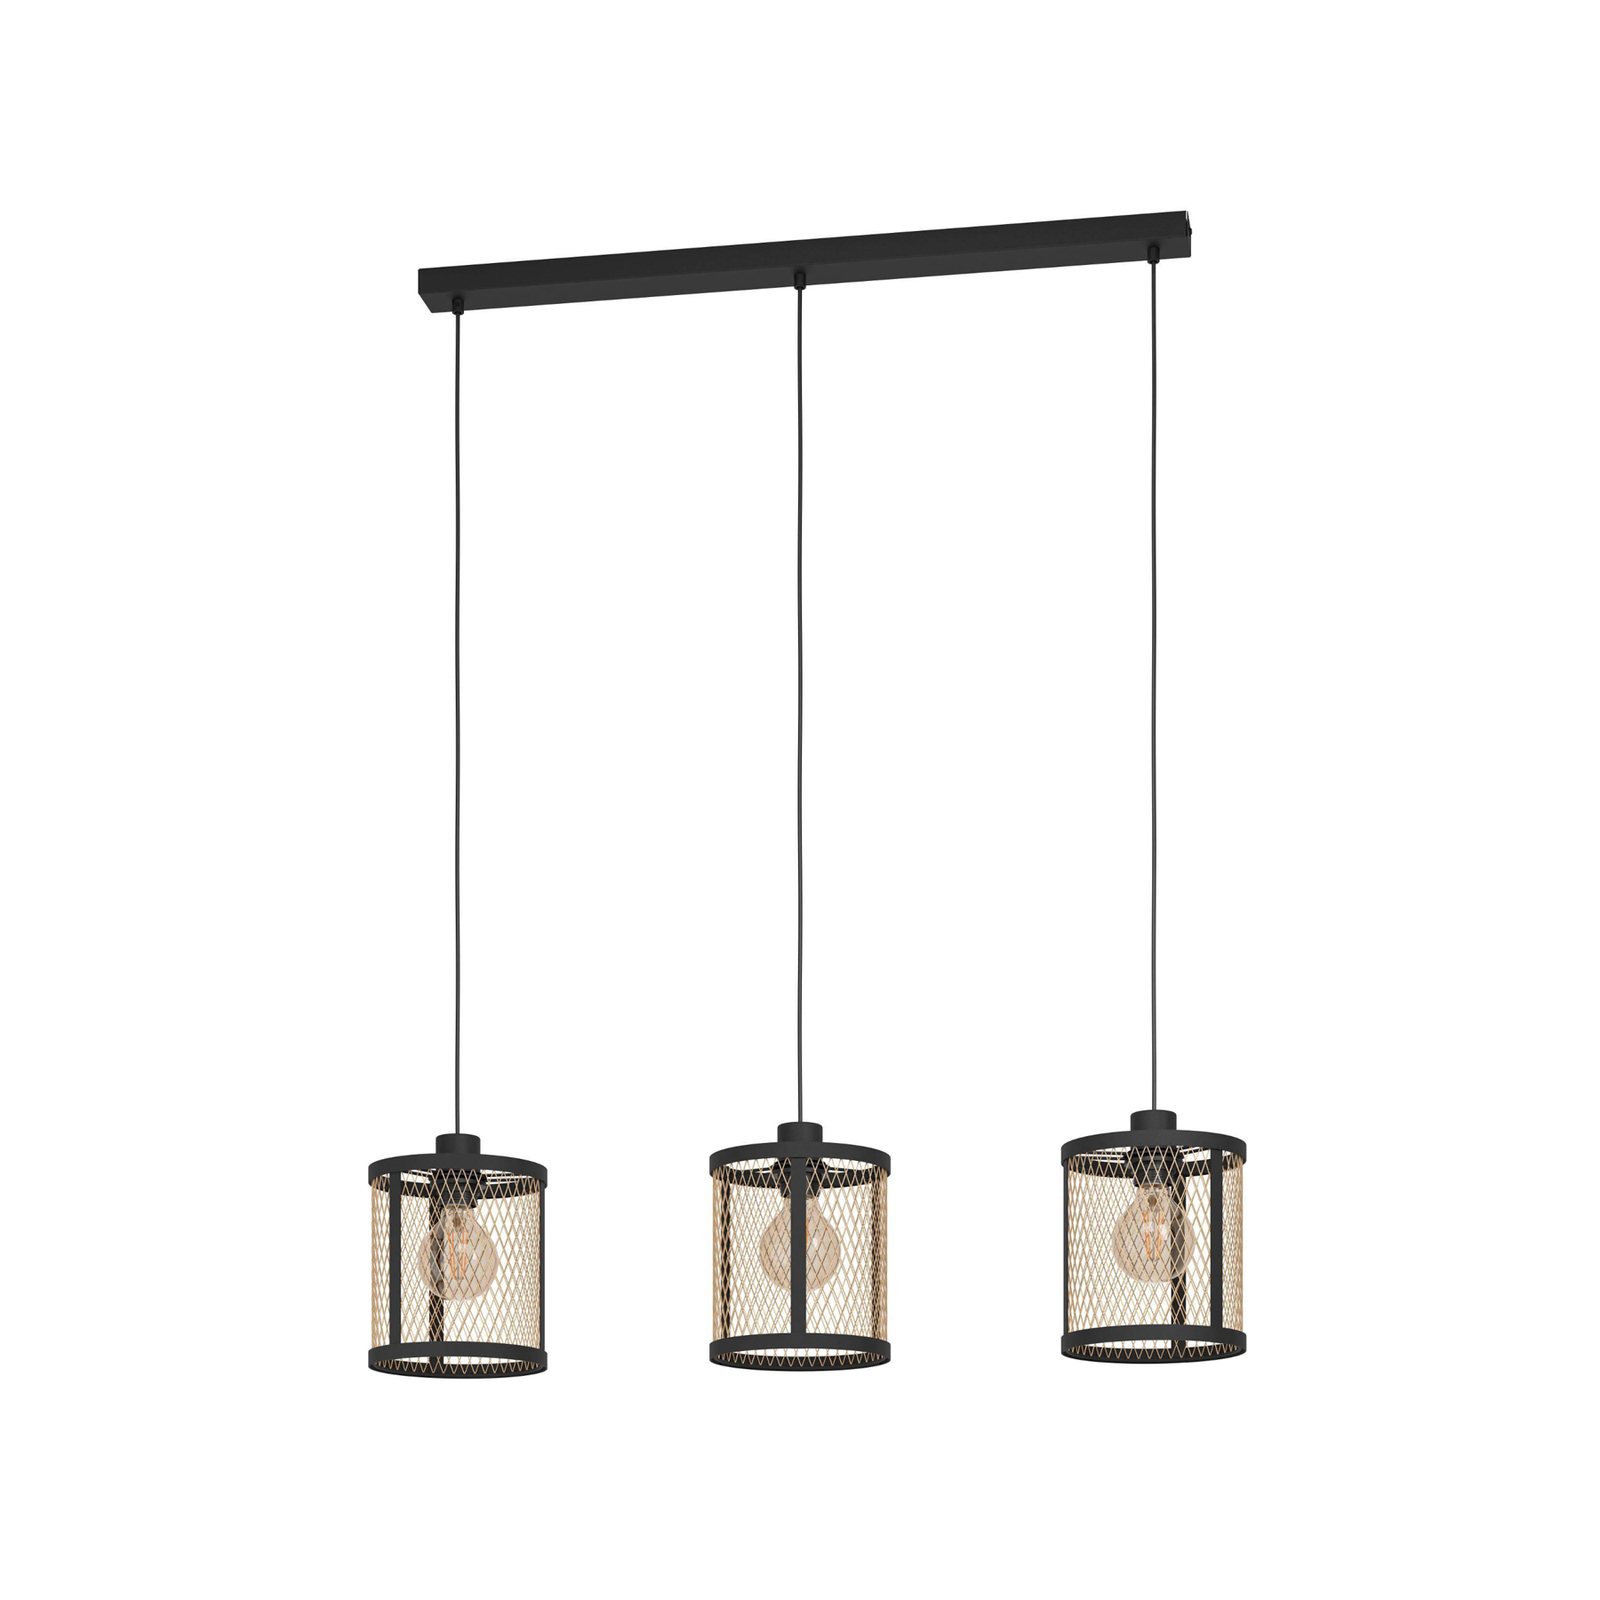 Viseća lampa Dellow, dužina 88 cm, crna/boja mesinga, 3 žarulje